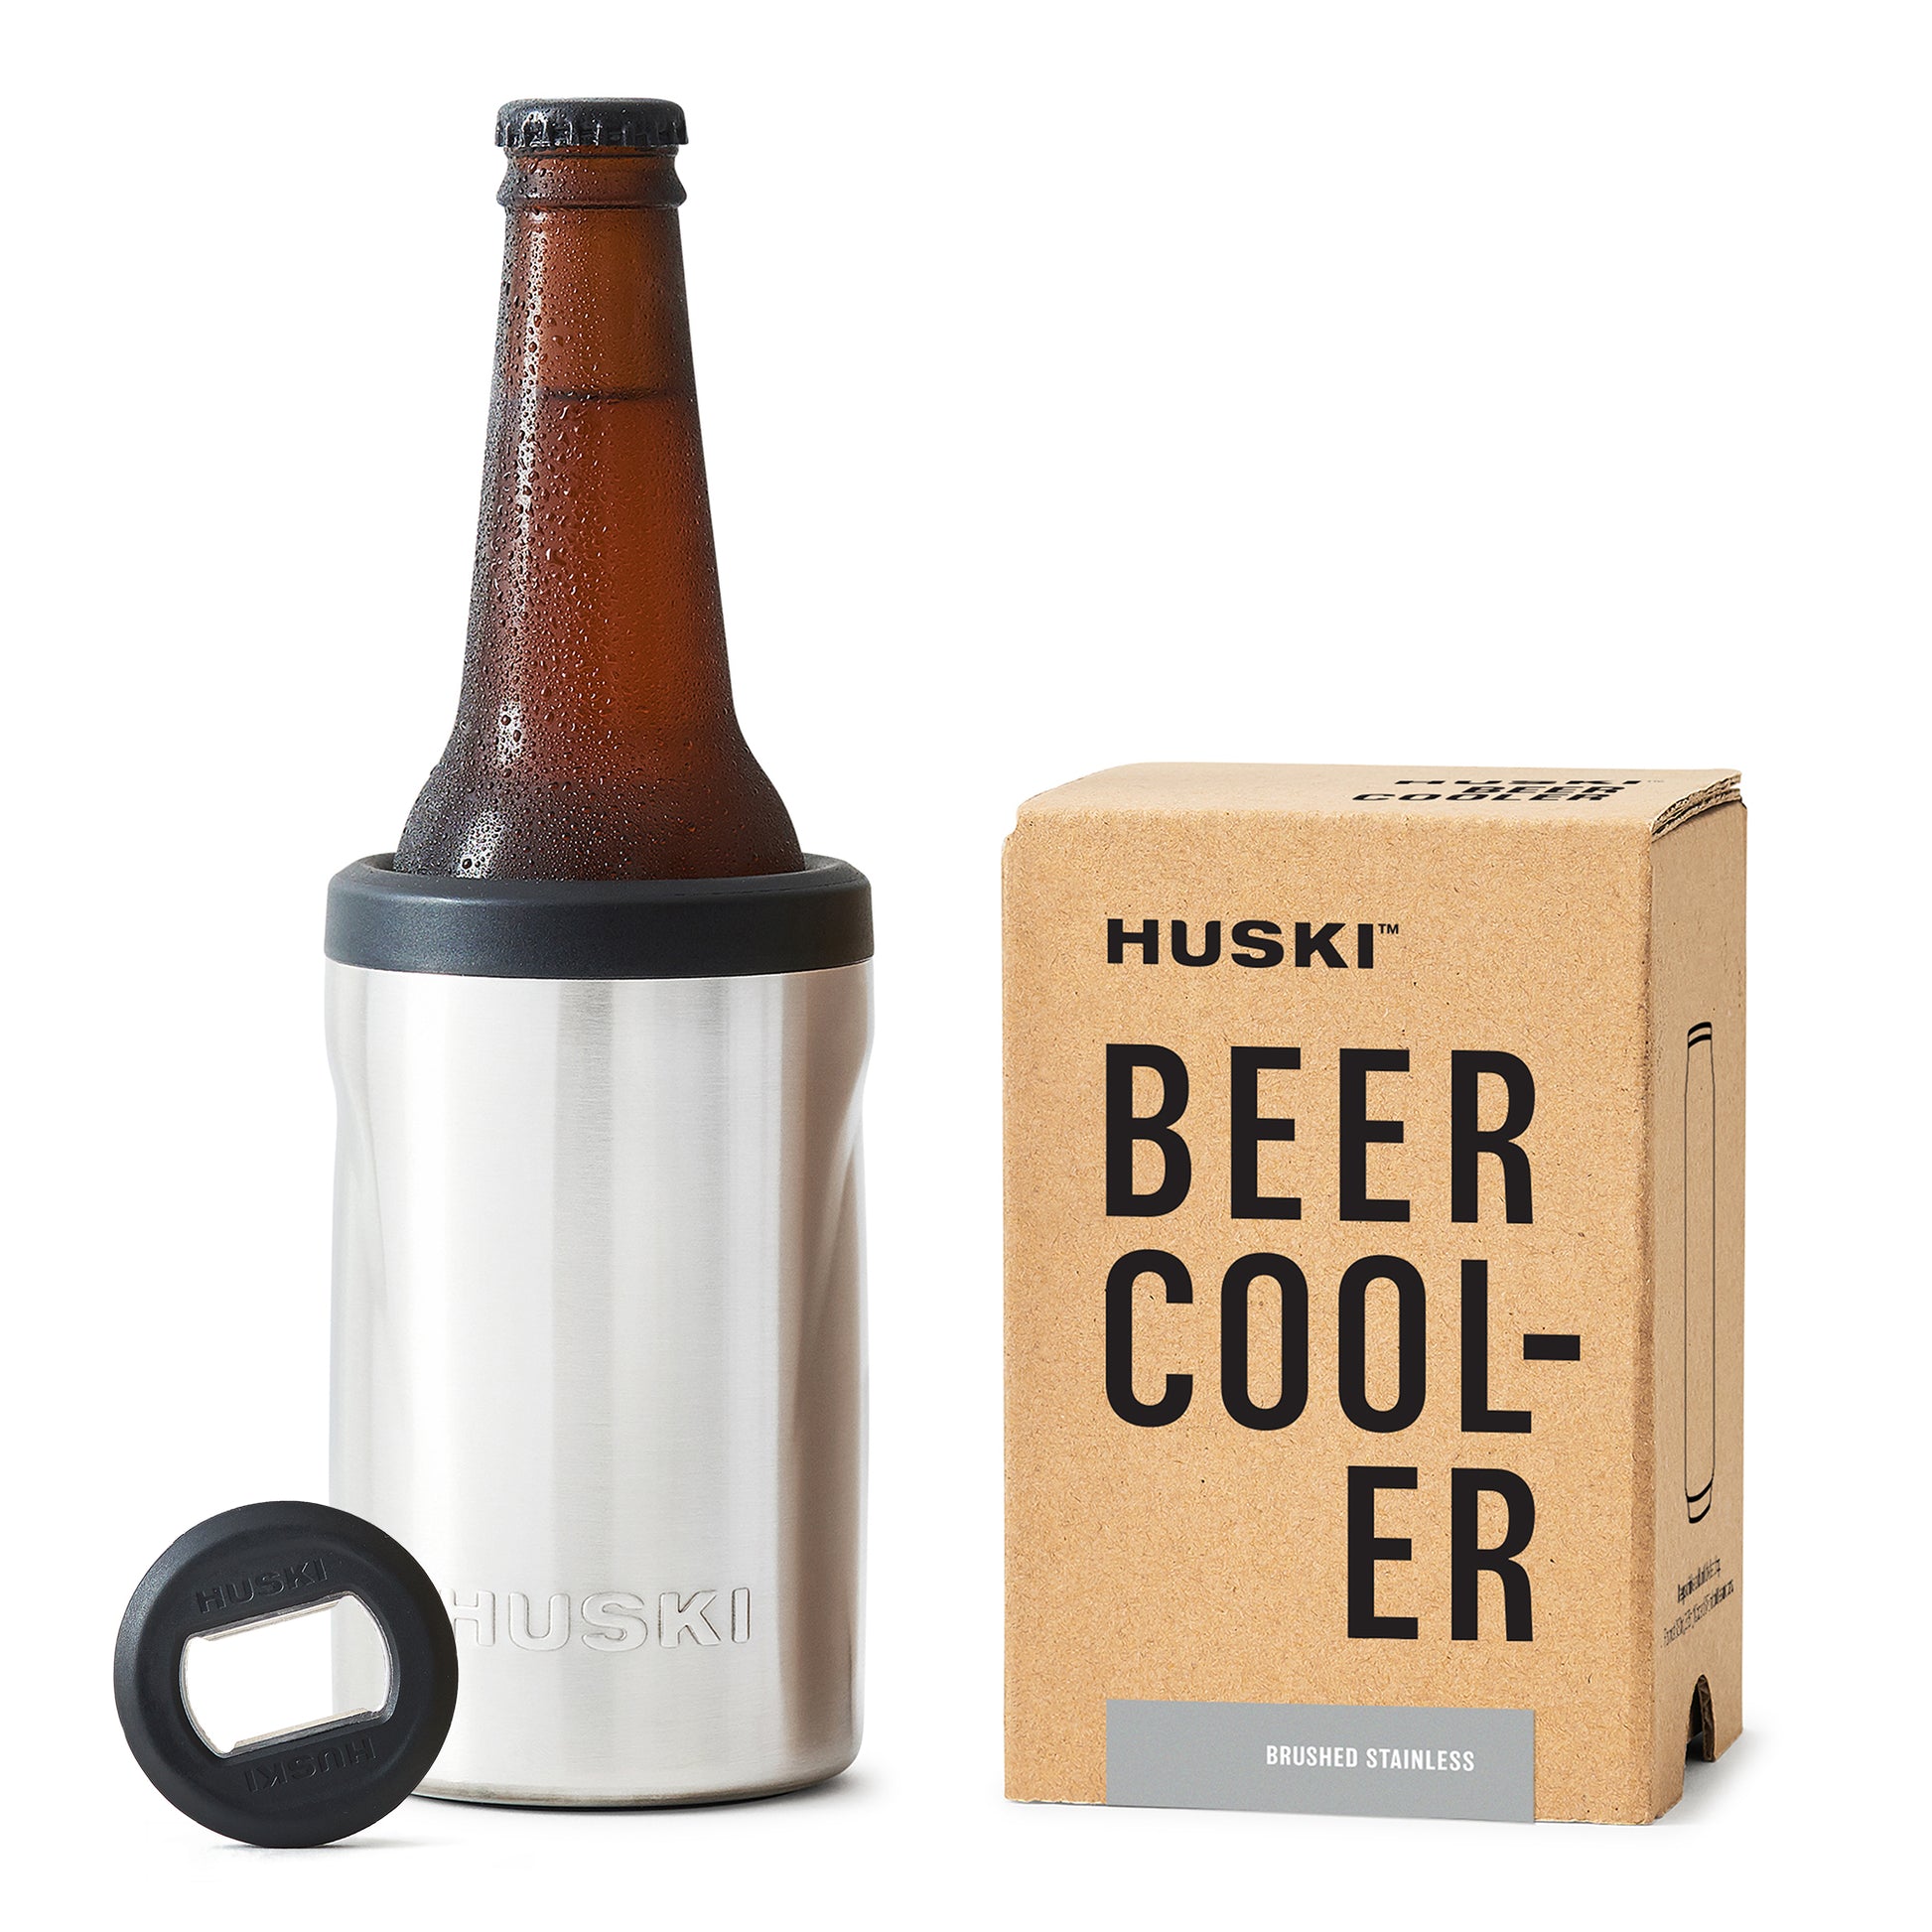 Stubby Holders - The Graet Australian Drink cooler - CoolerMerch